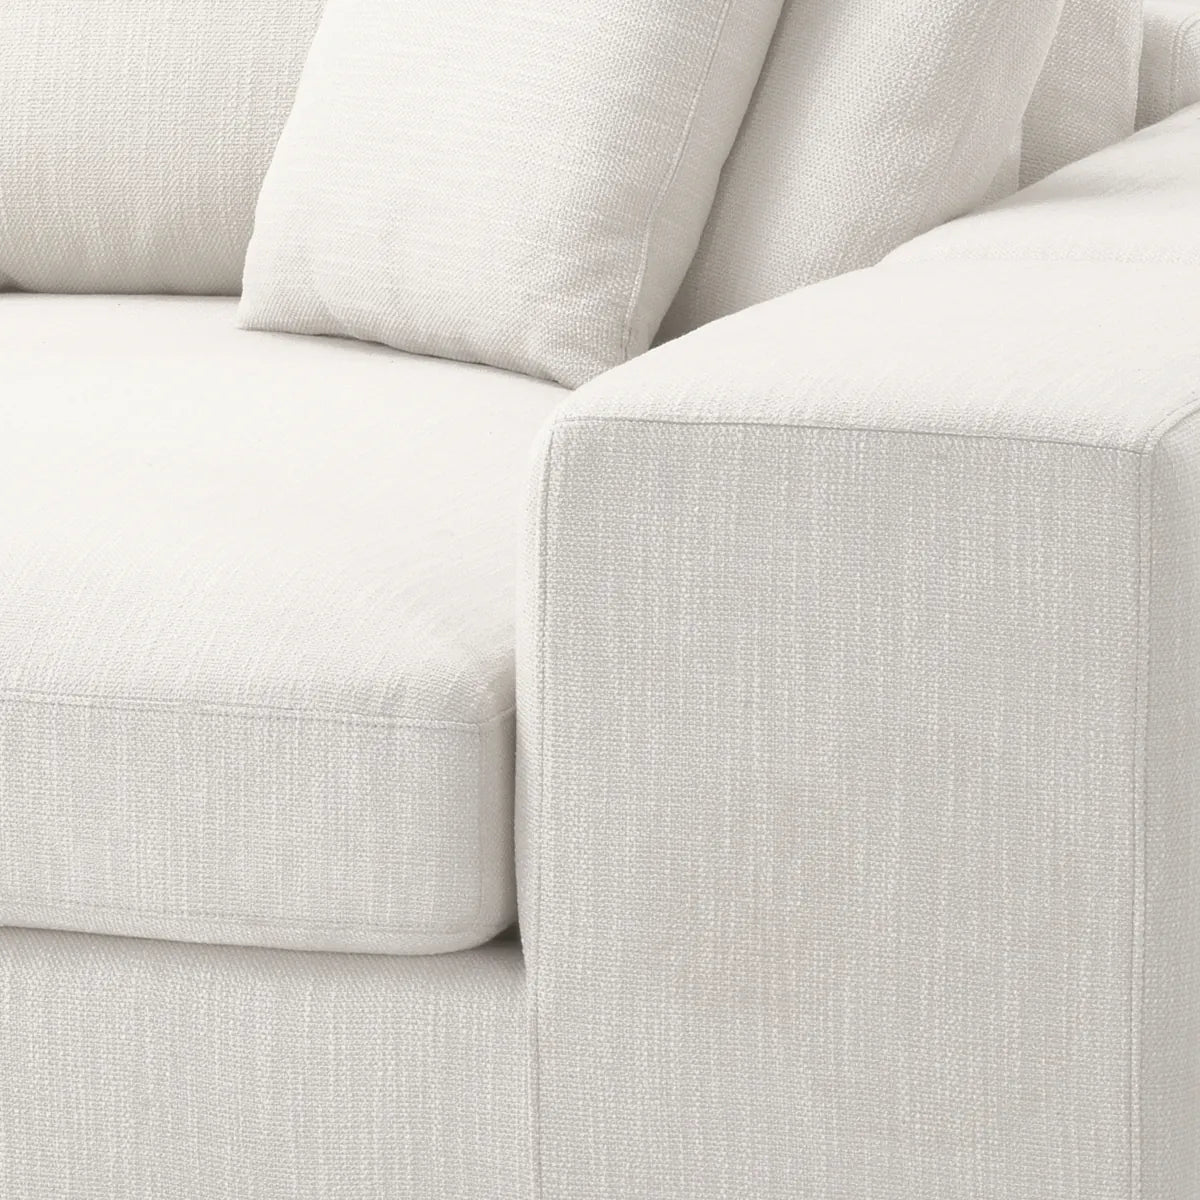 Sofa Vista Grande Lounge - Avalon White